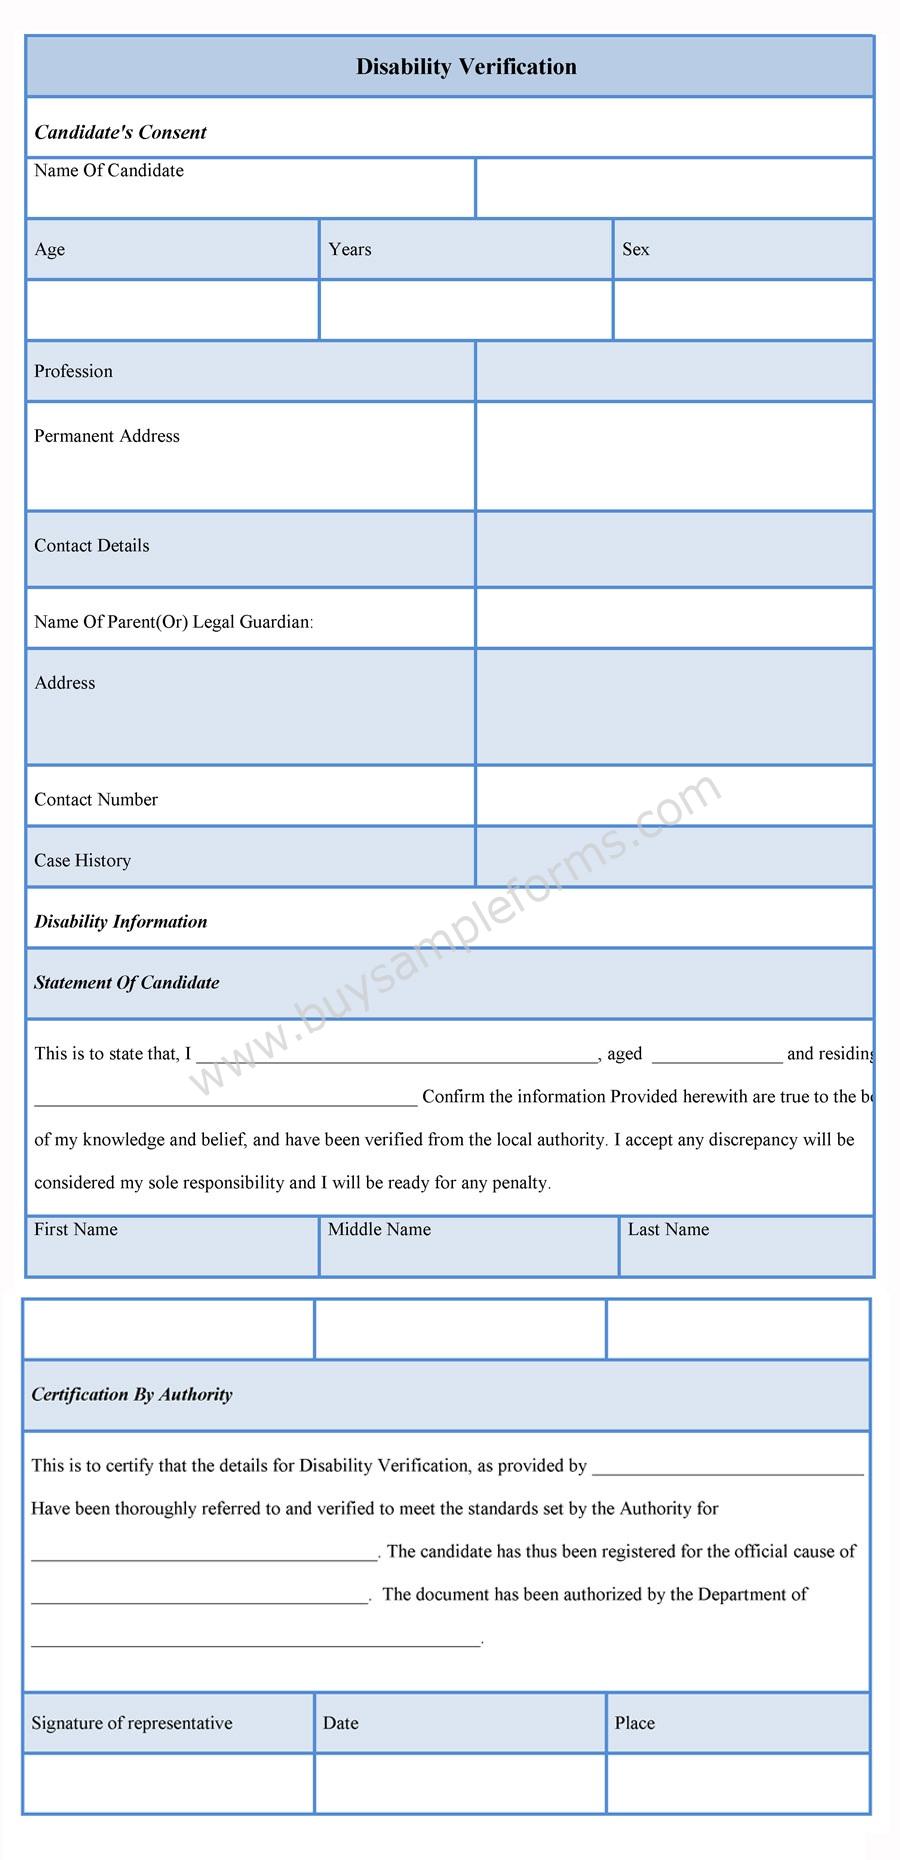 disability-verification-form